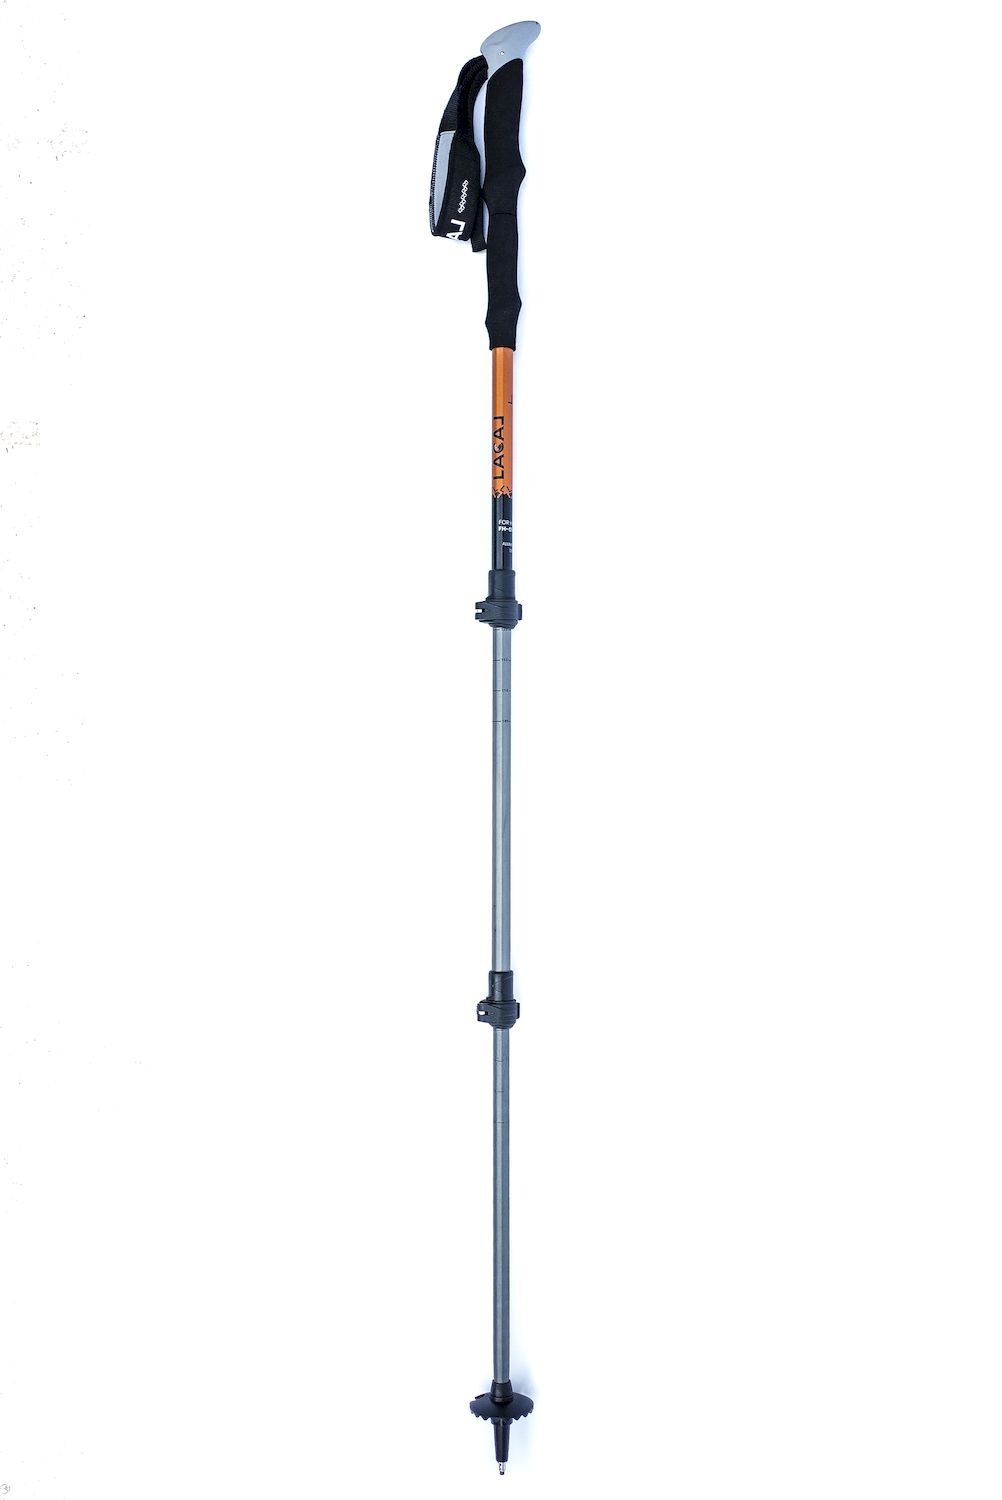 Lacal Alu Stick - Walking poles